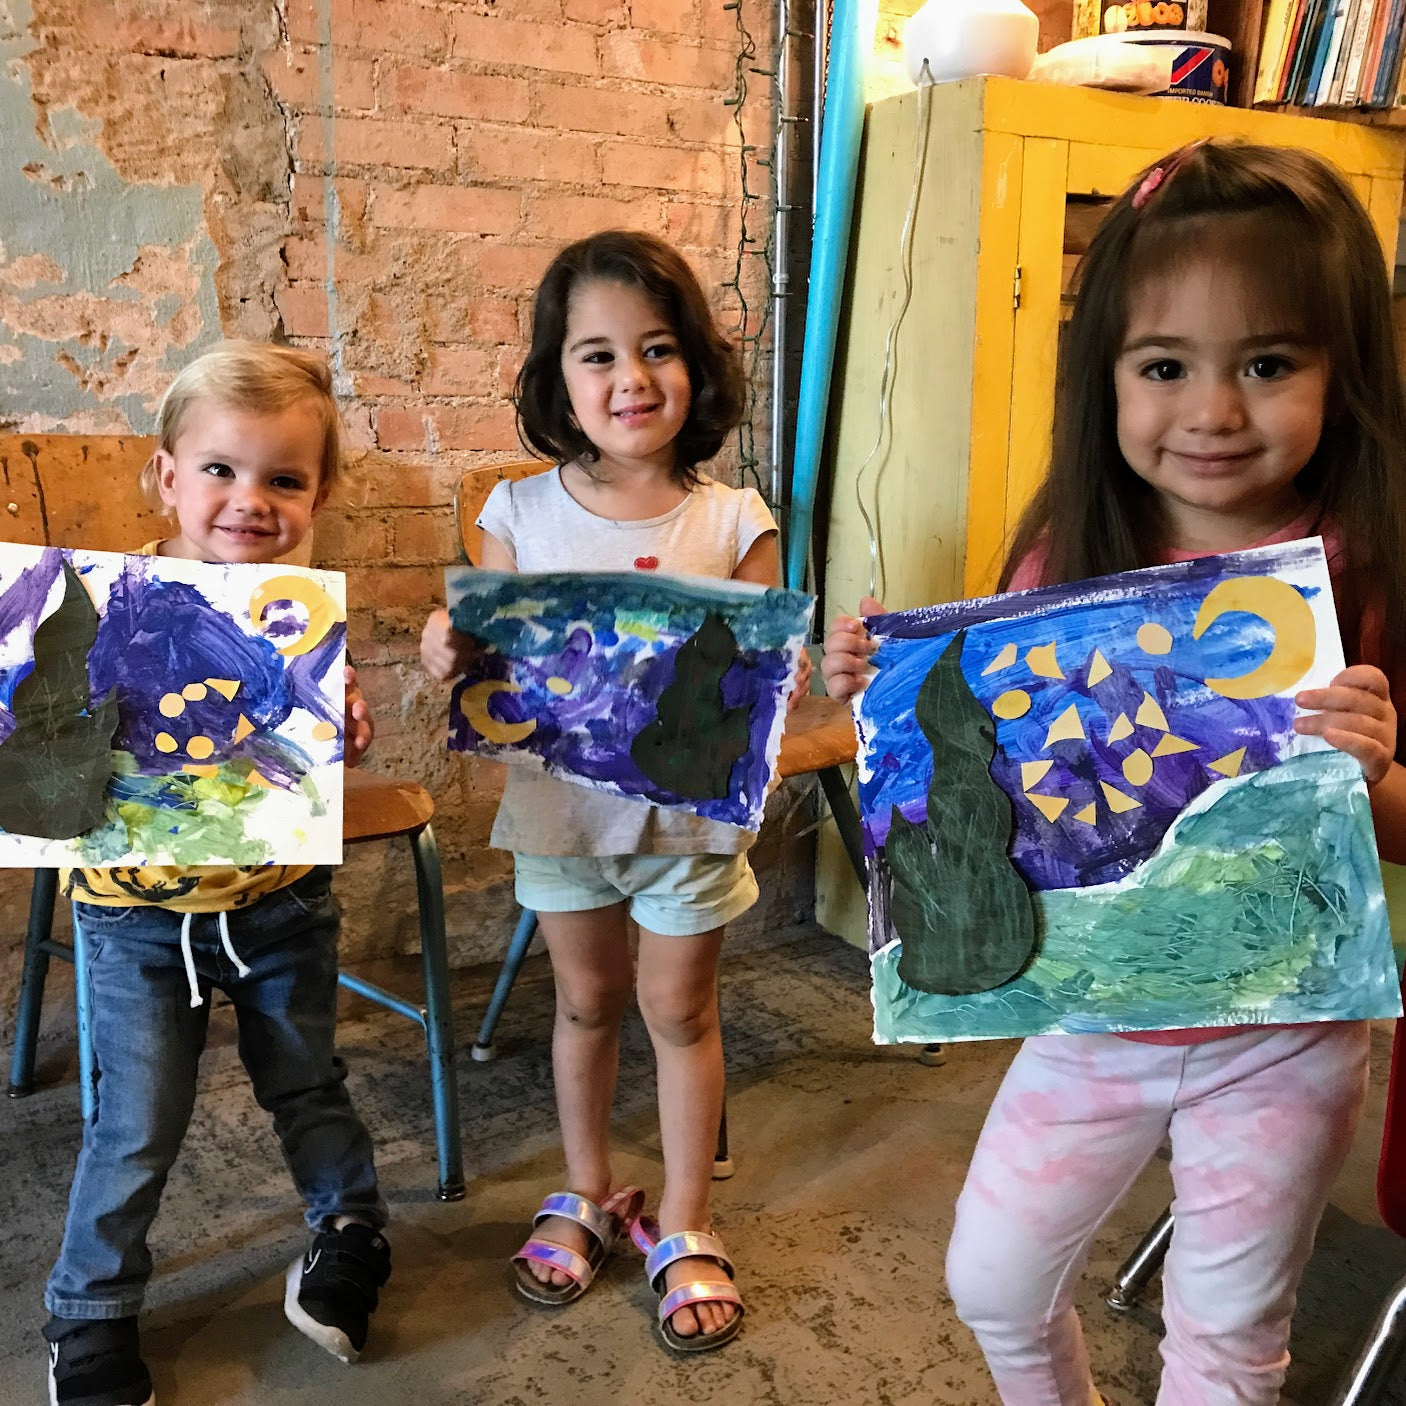 SUMMER Semester Toddler Weekly Art (age 2-4)